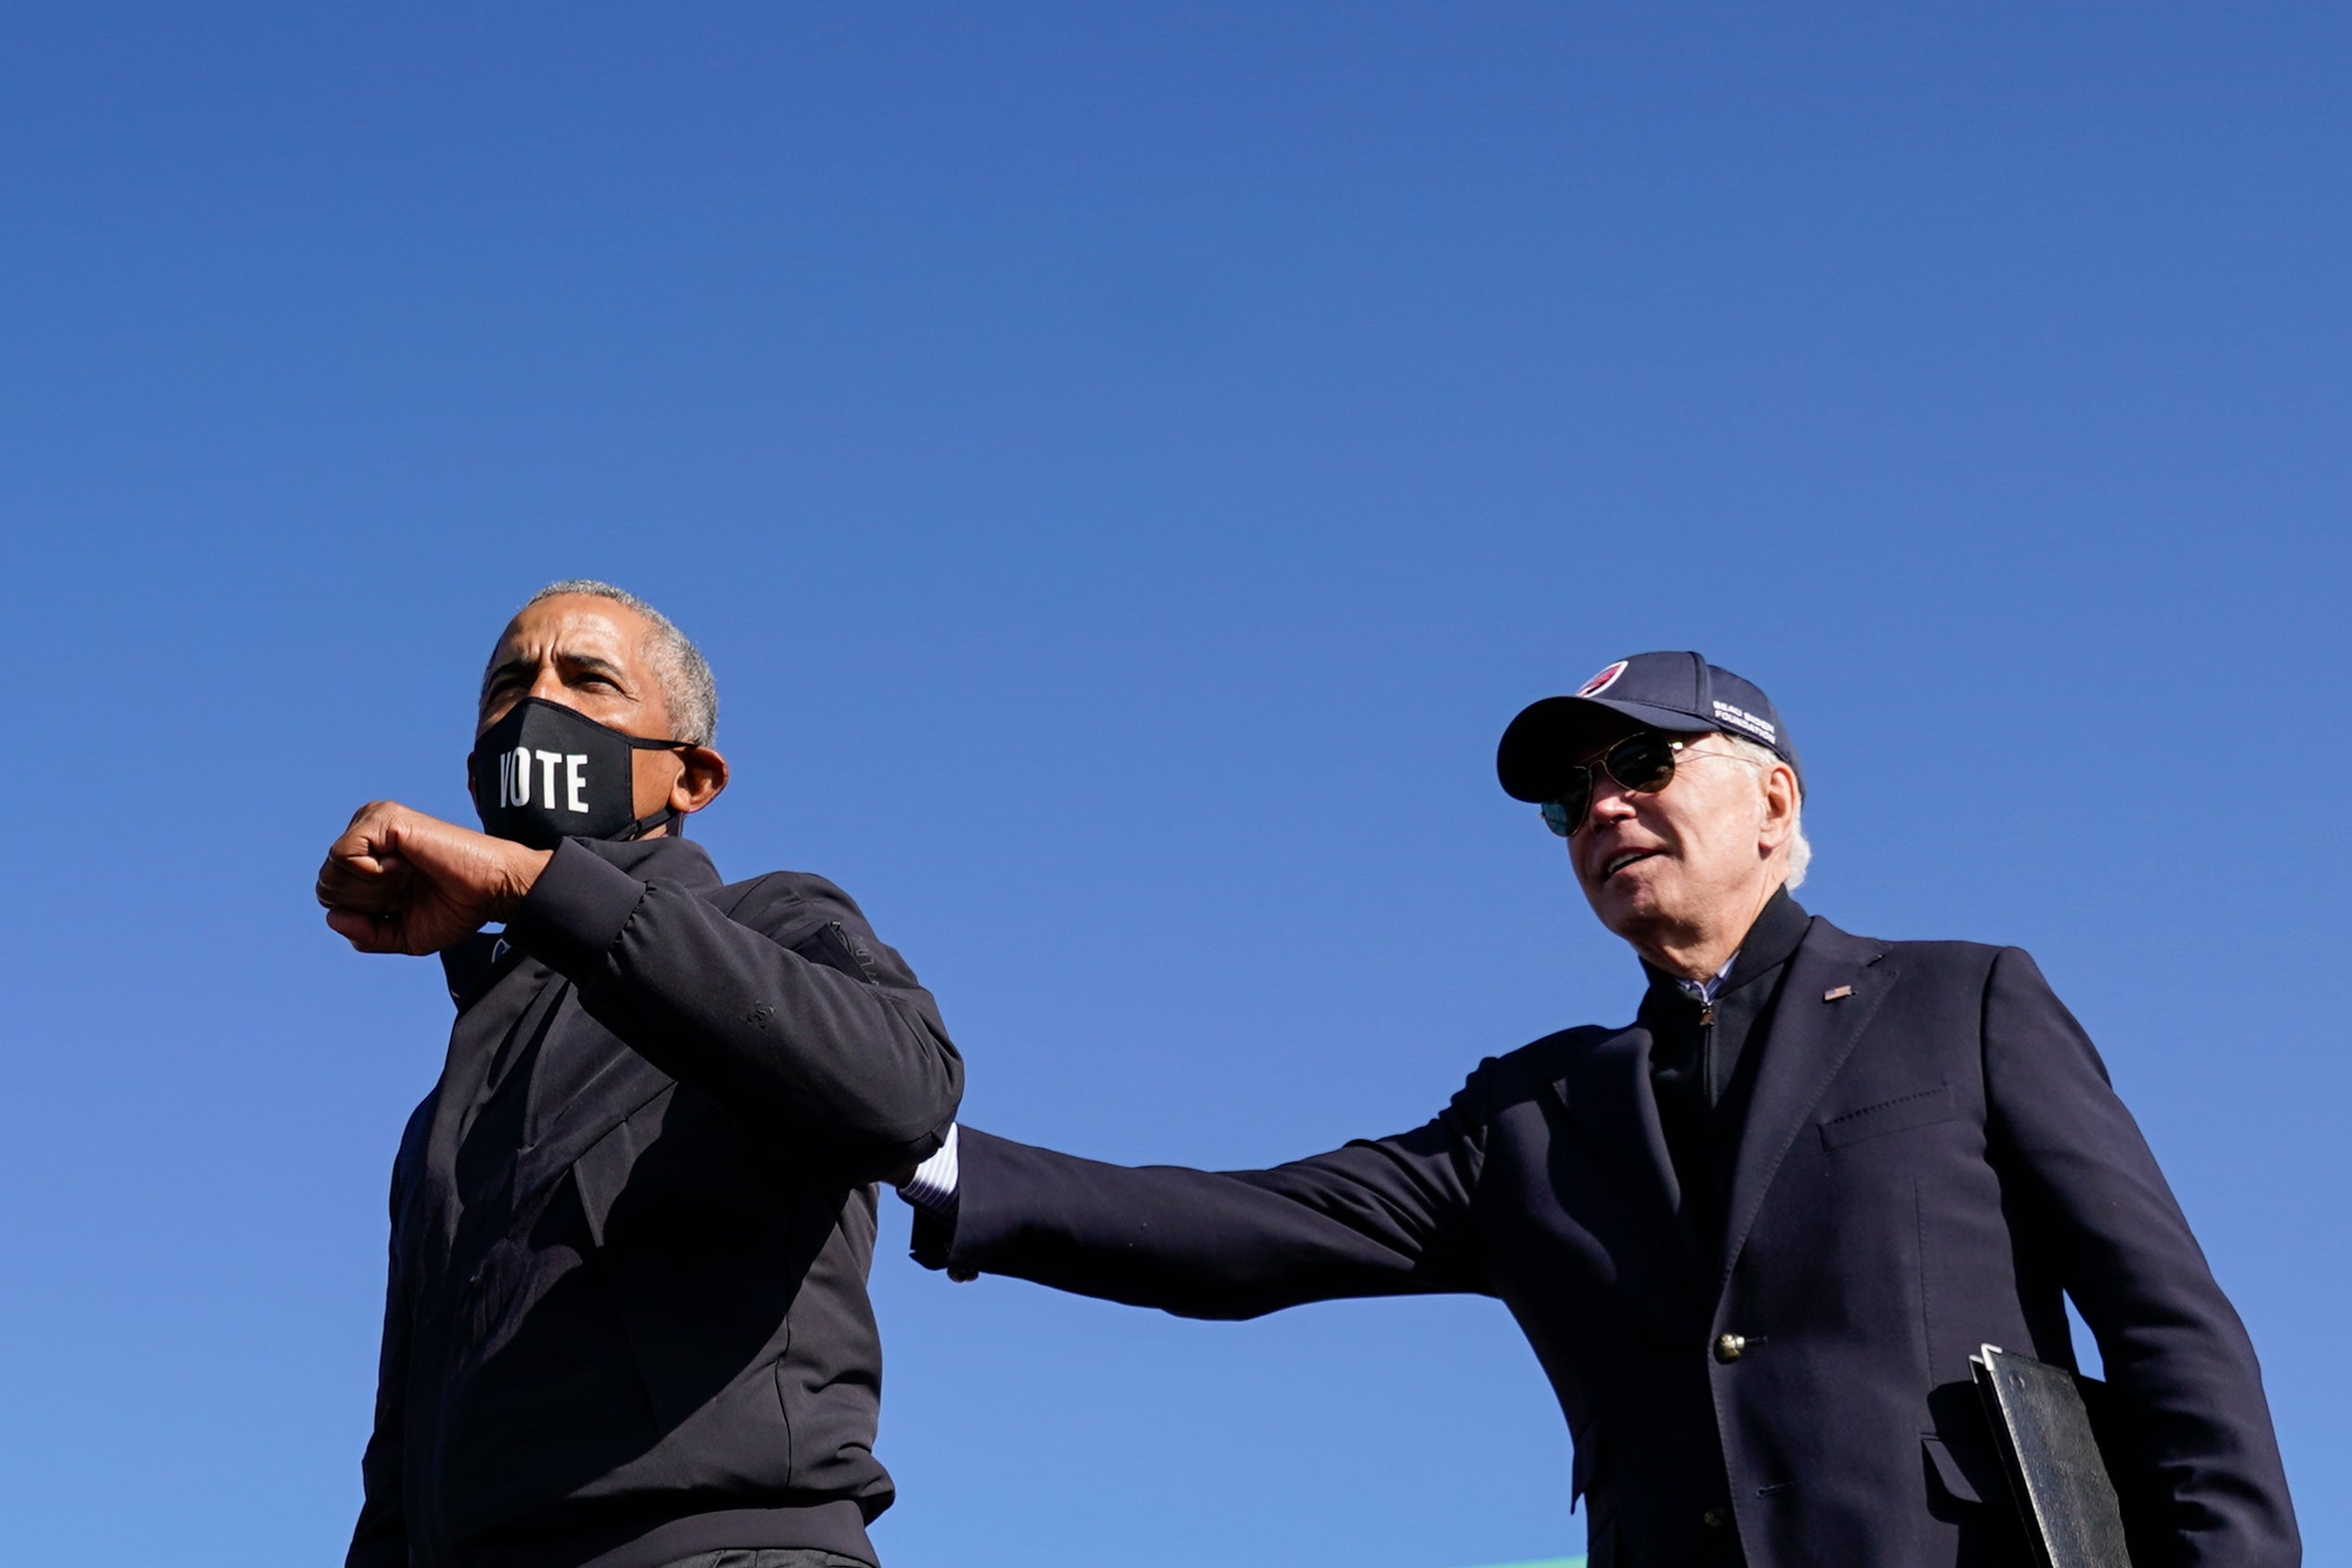 ‘Joe was all warmth’: Obama’s new book stops short of analysing Biden ...